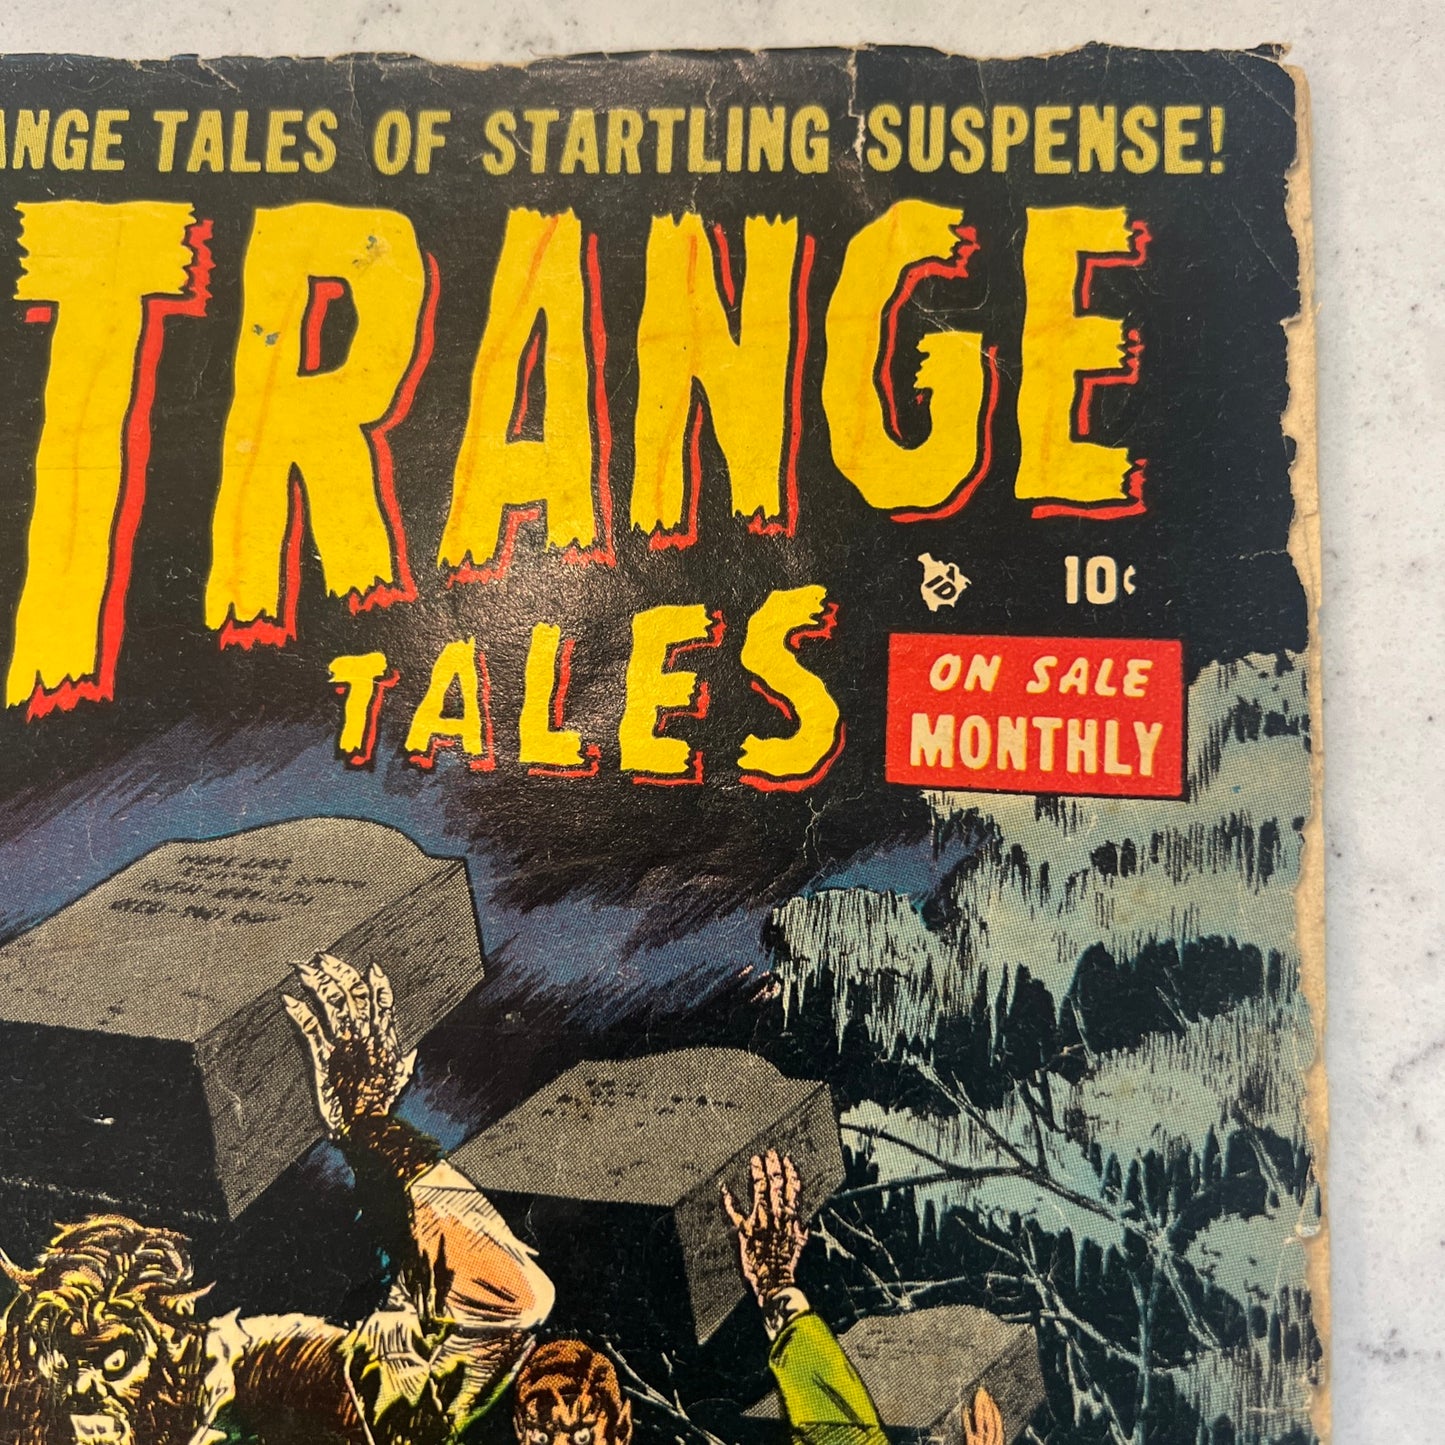 Strange Tales #27 (Marvel/Atlas/1954) Pre Code Horror